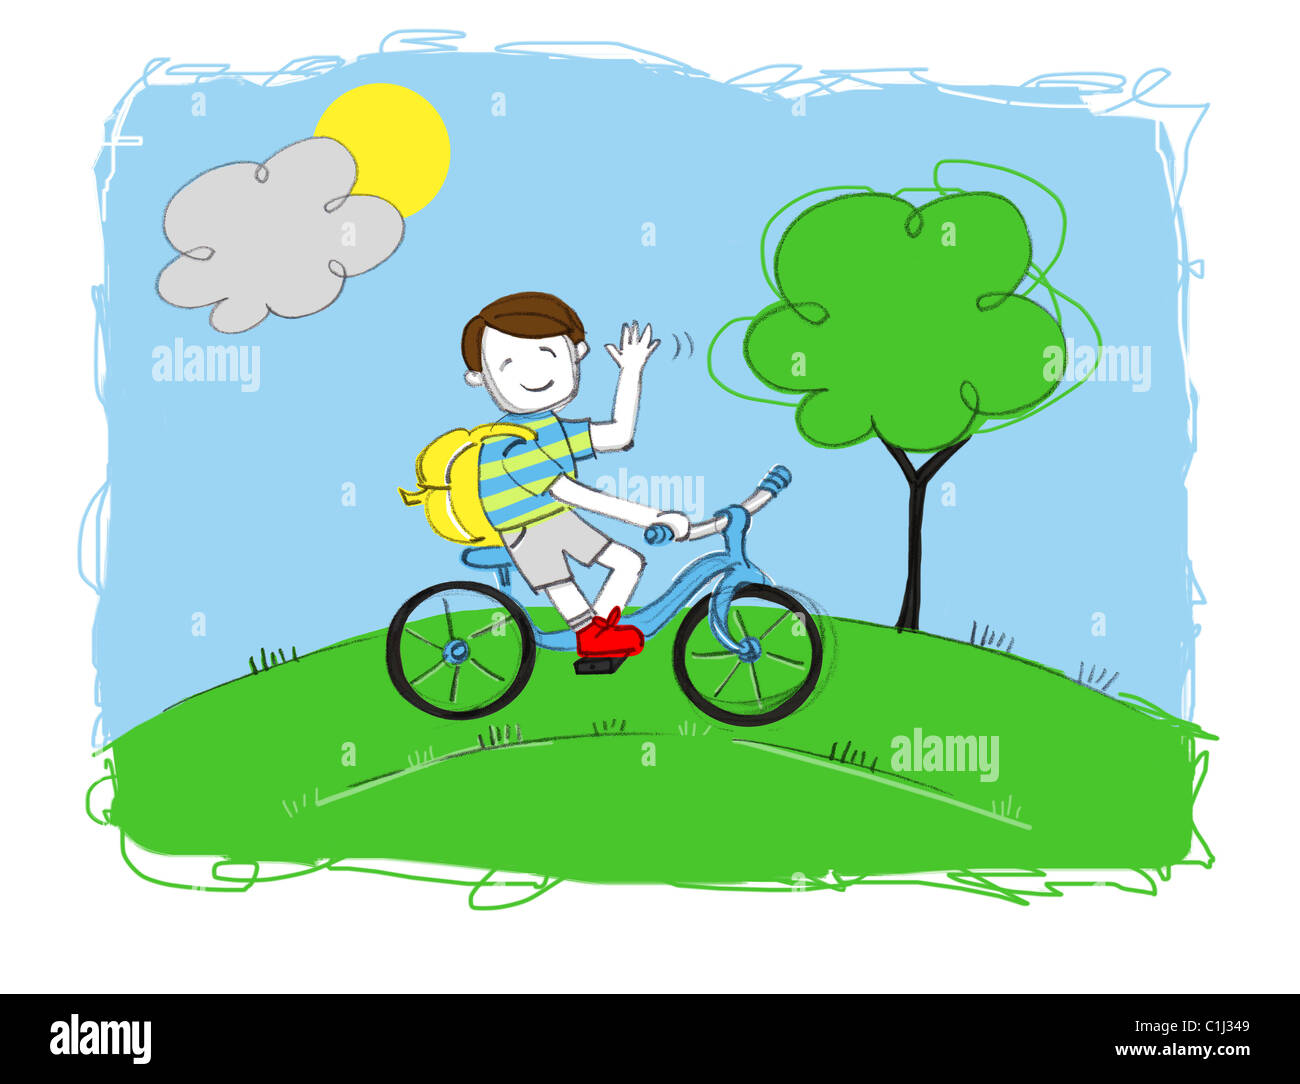 Illustration of Boy Riding a Bike Stock Photo